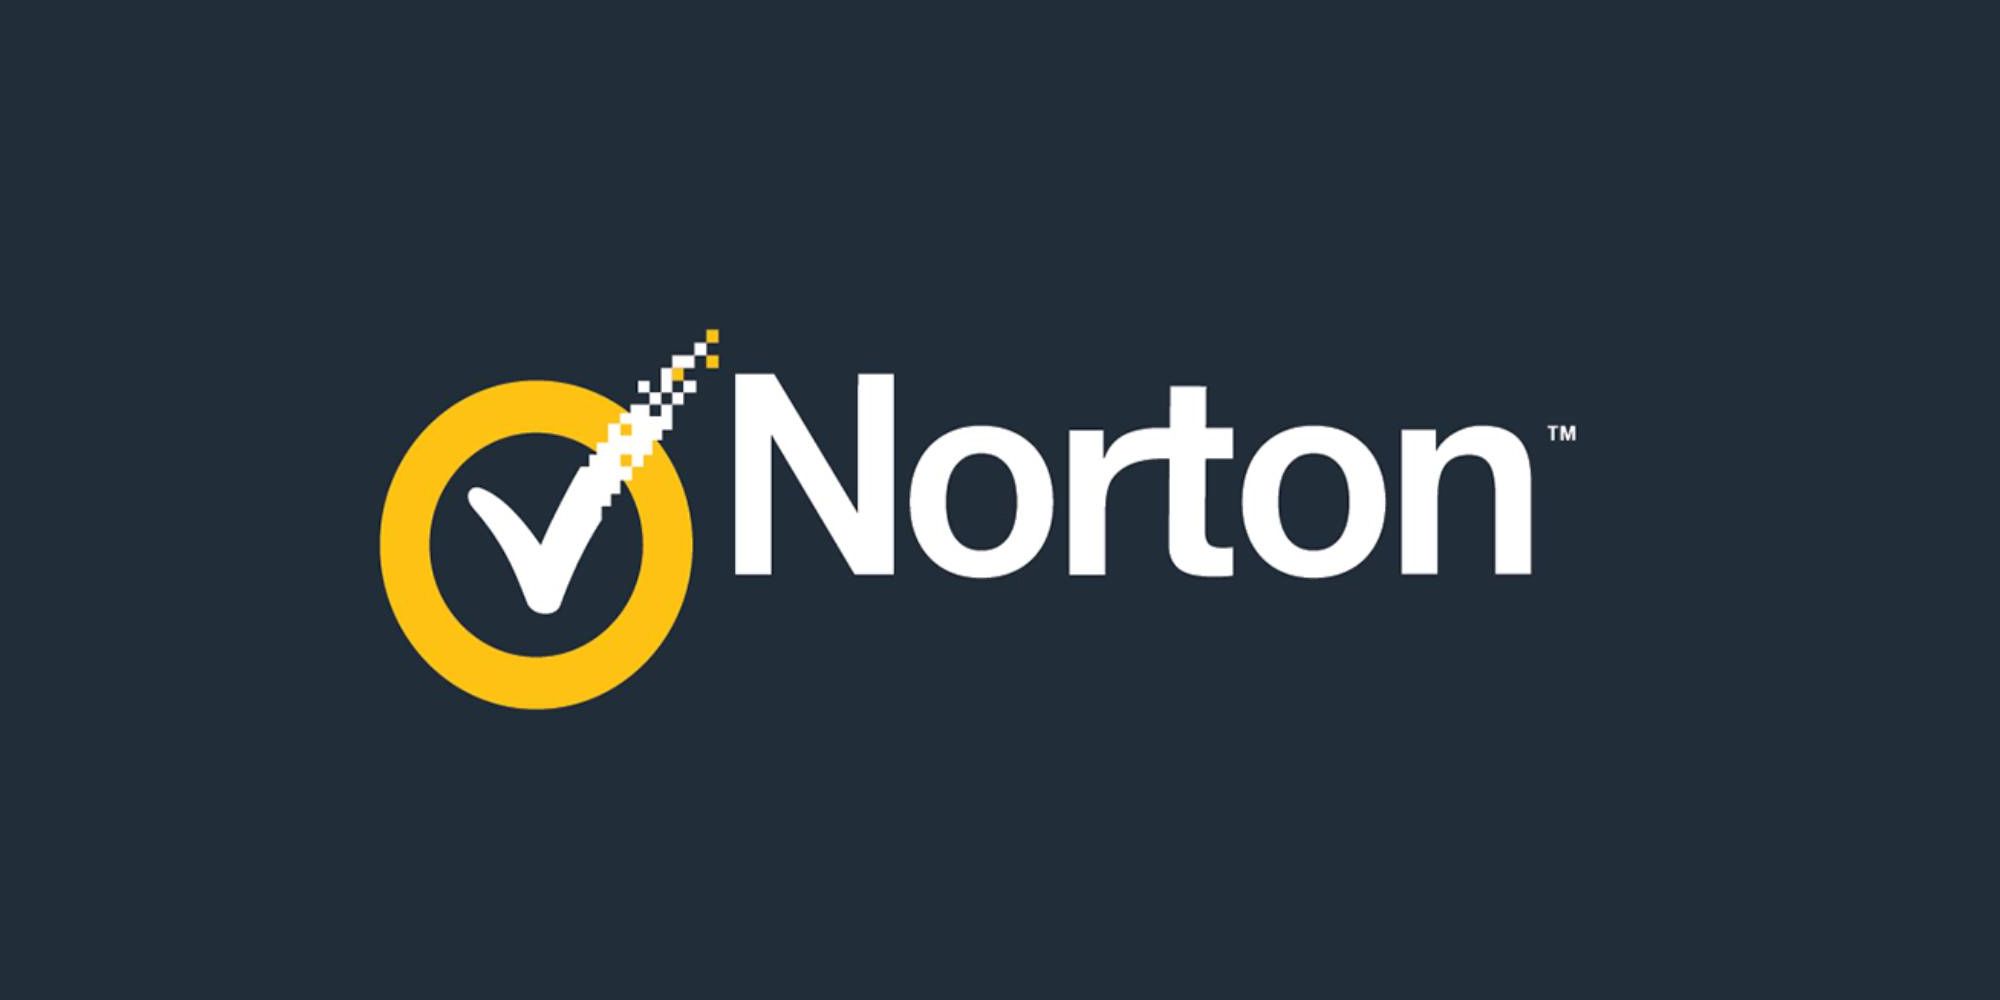 Norton logo on a navy background